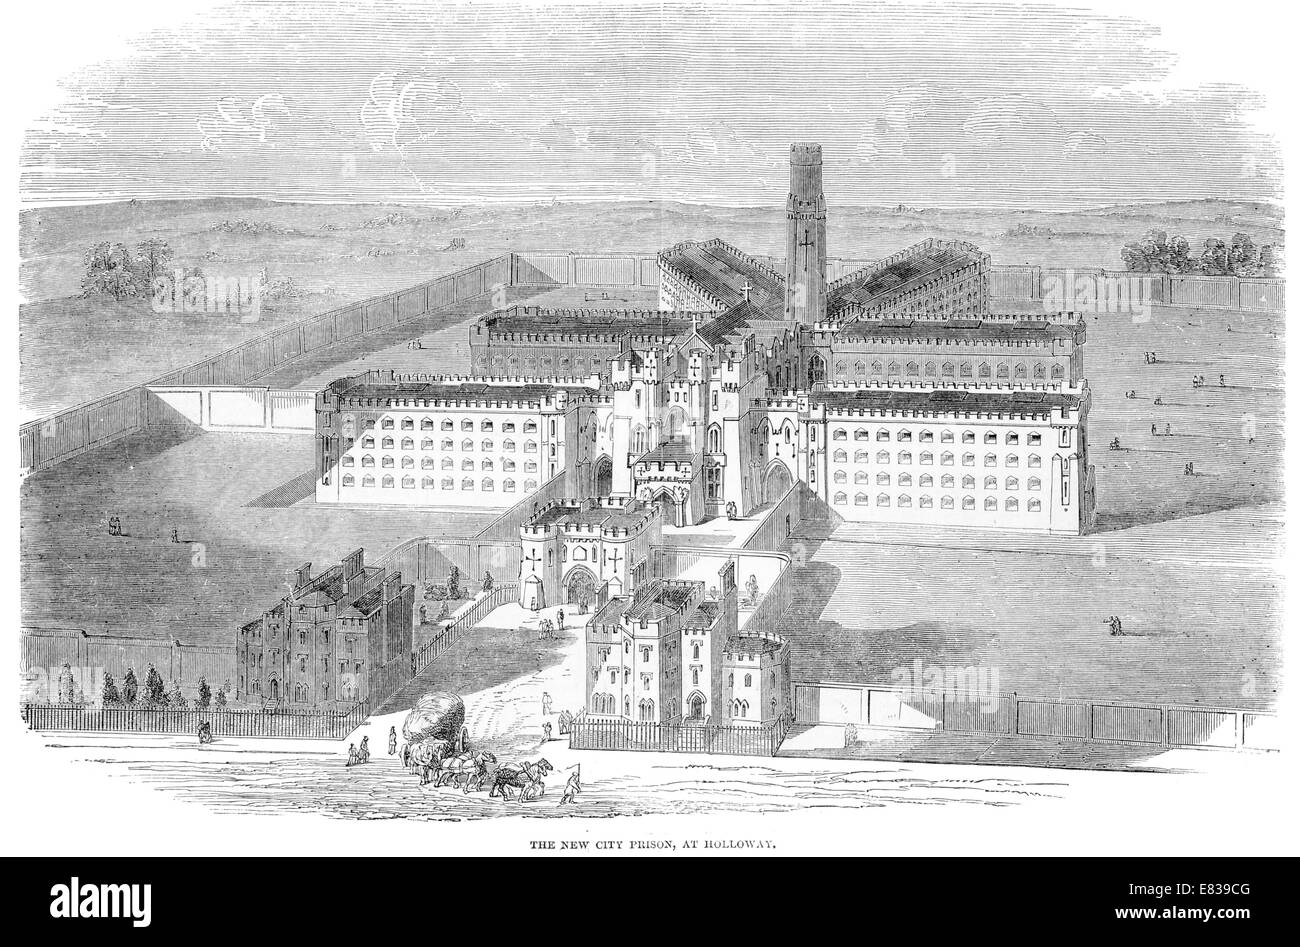 New City Prison Holloway London circa 1885 Stock Photo